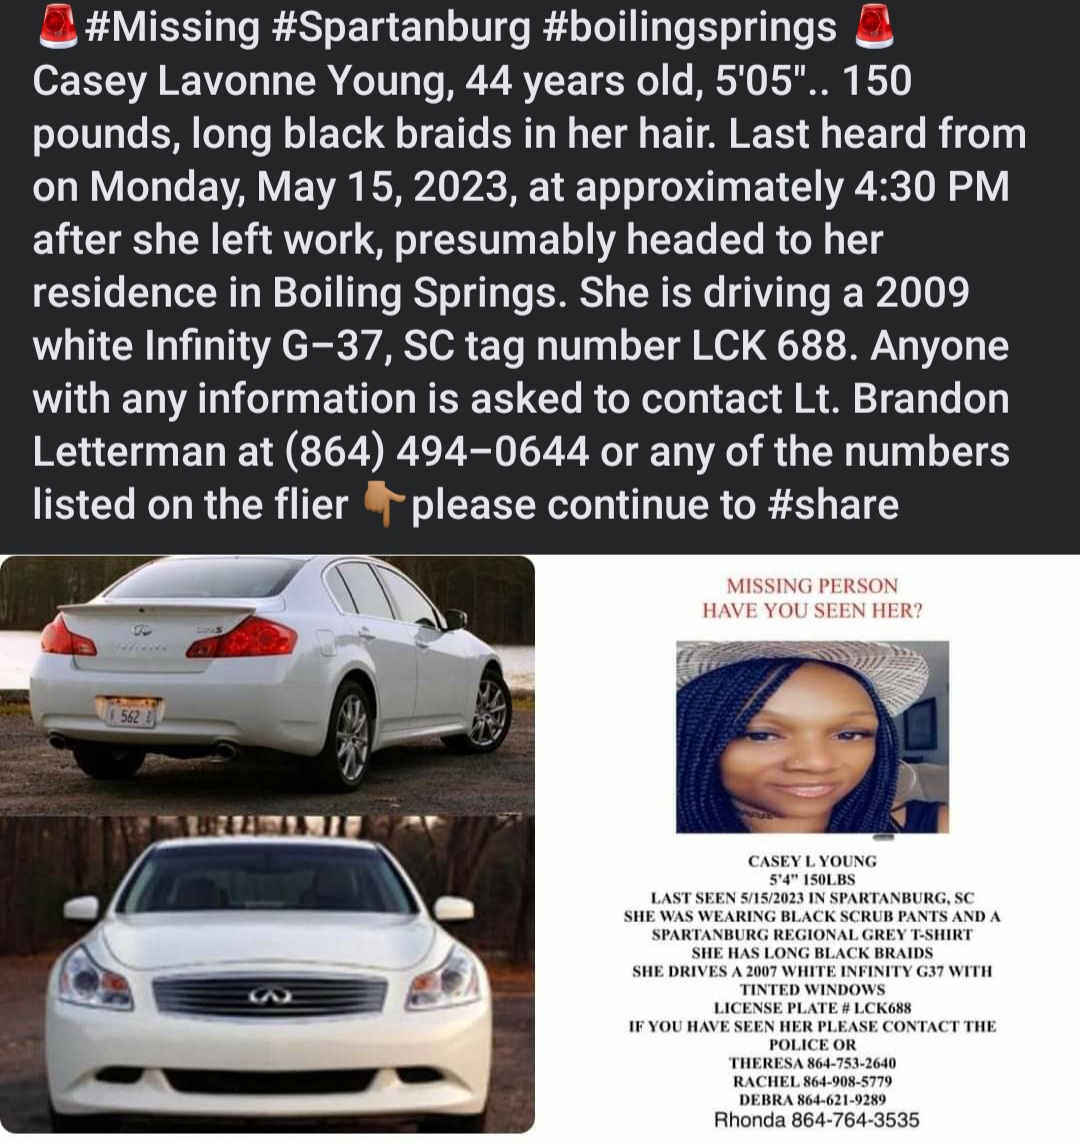 Please RT!!! #MissingPersons #missing #missingperson #missingwoman #truecrimecommunity